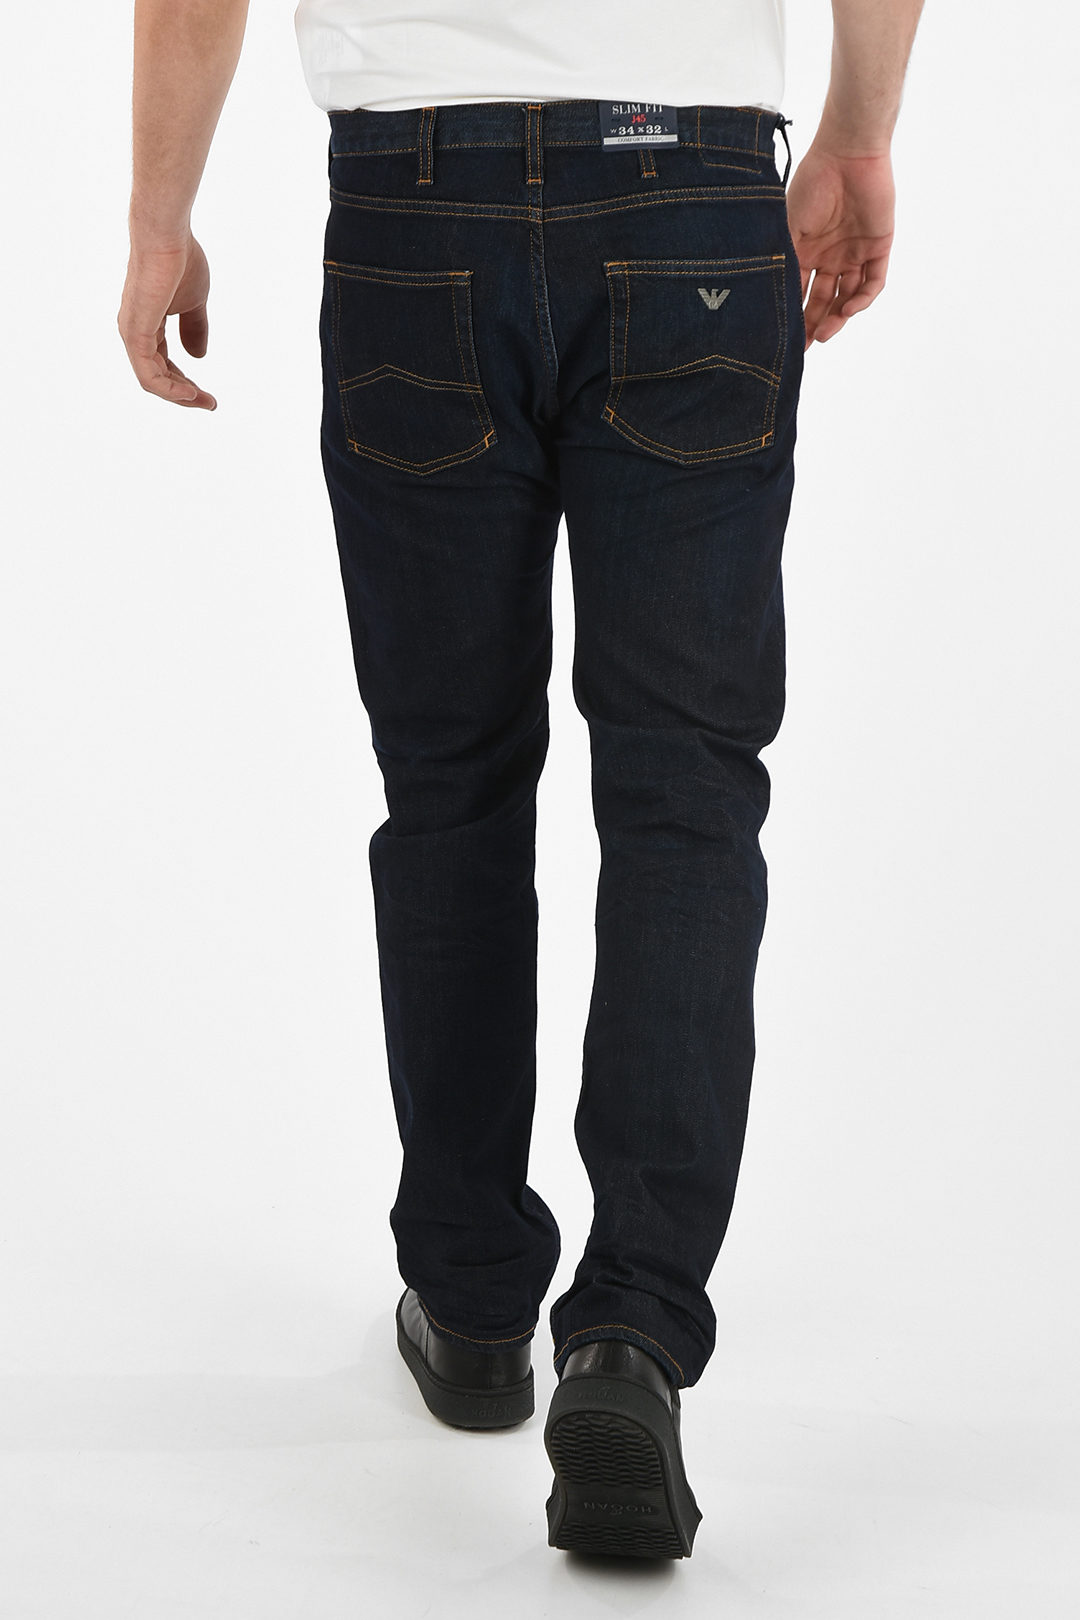 Herkenning Belachelijk Praten Armani ARMANI JEANS 20cm Slim Fit J45 Jeans L32 men - Glamood Outlet